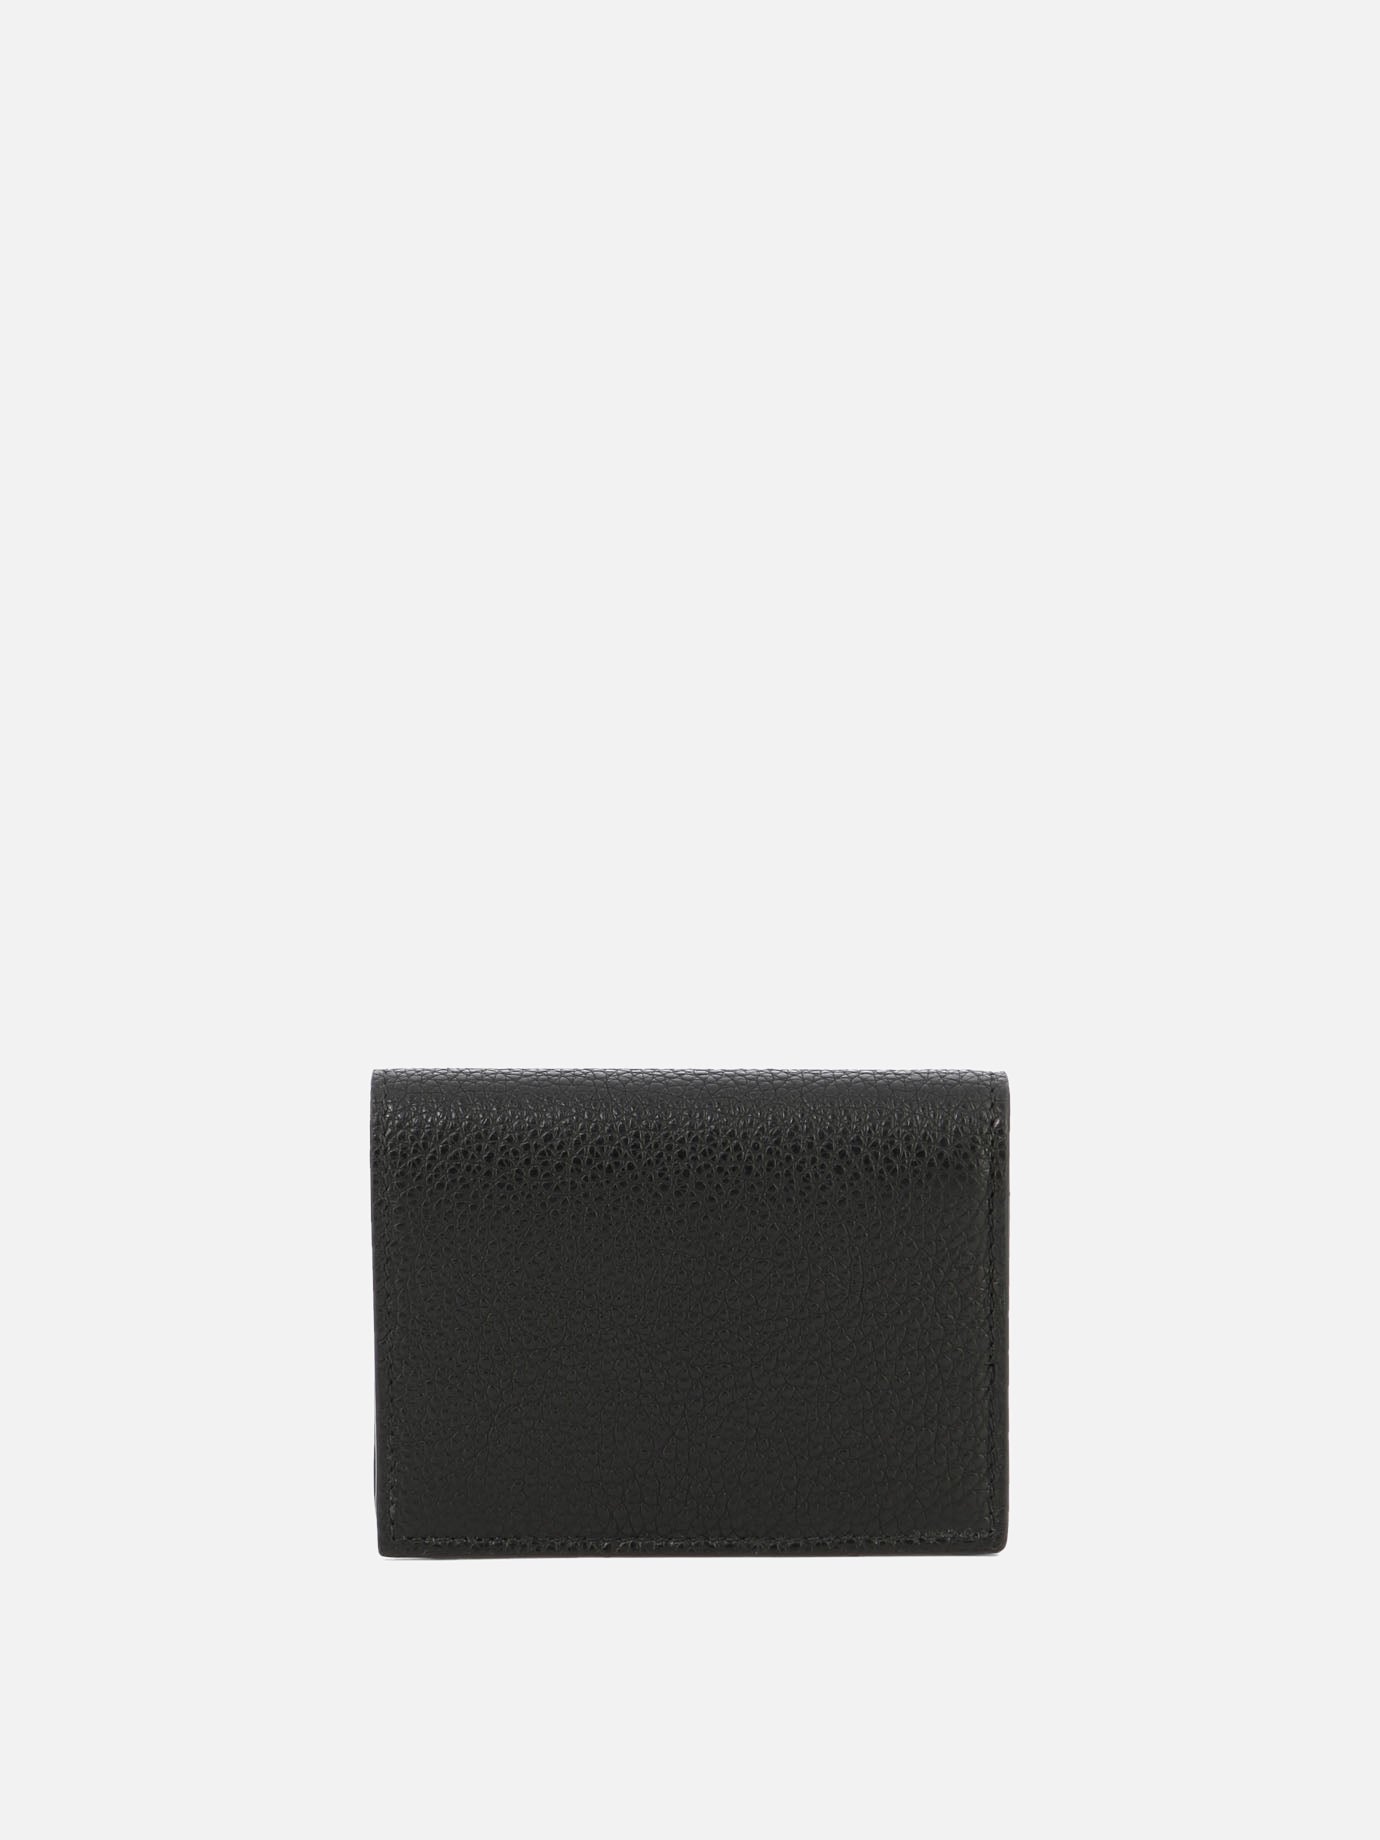 Gancini small wallet